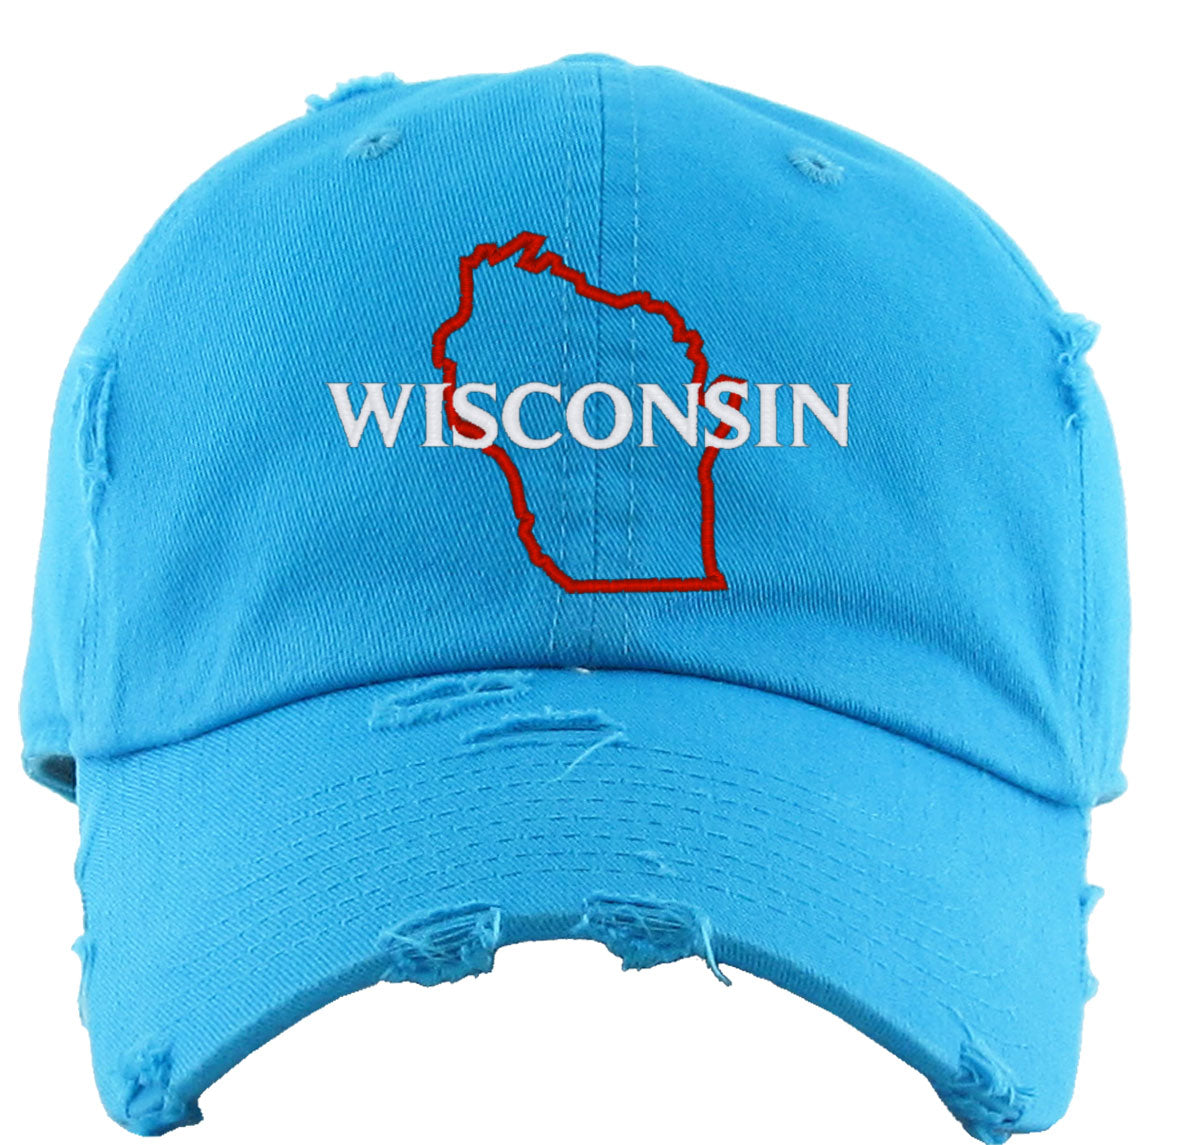 Wisconsin Vintage Baseball Cap